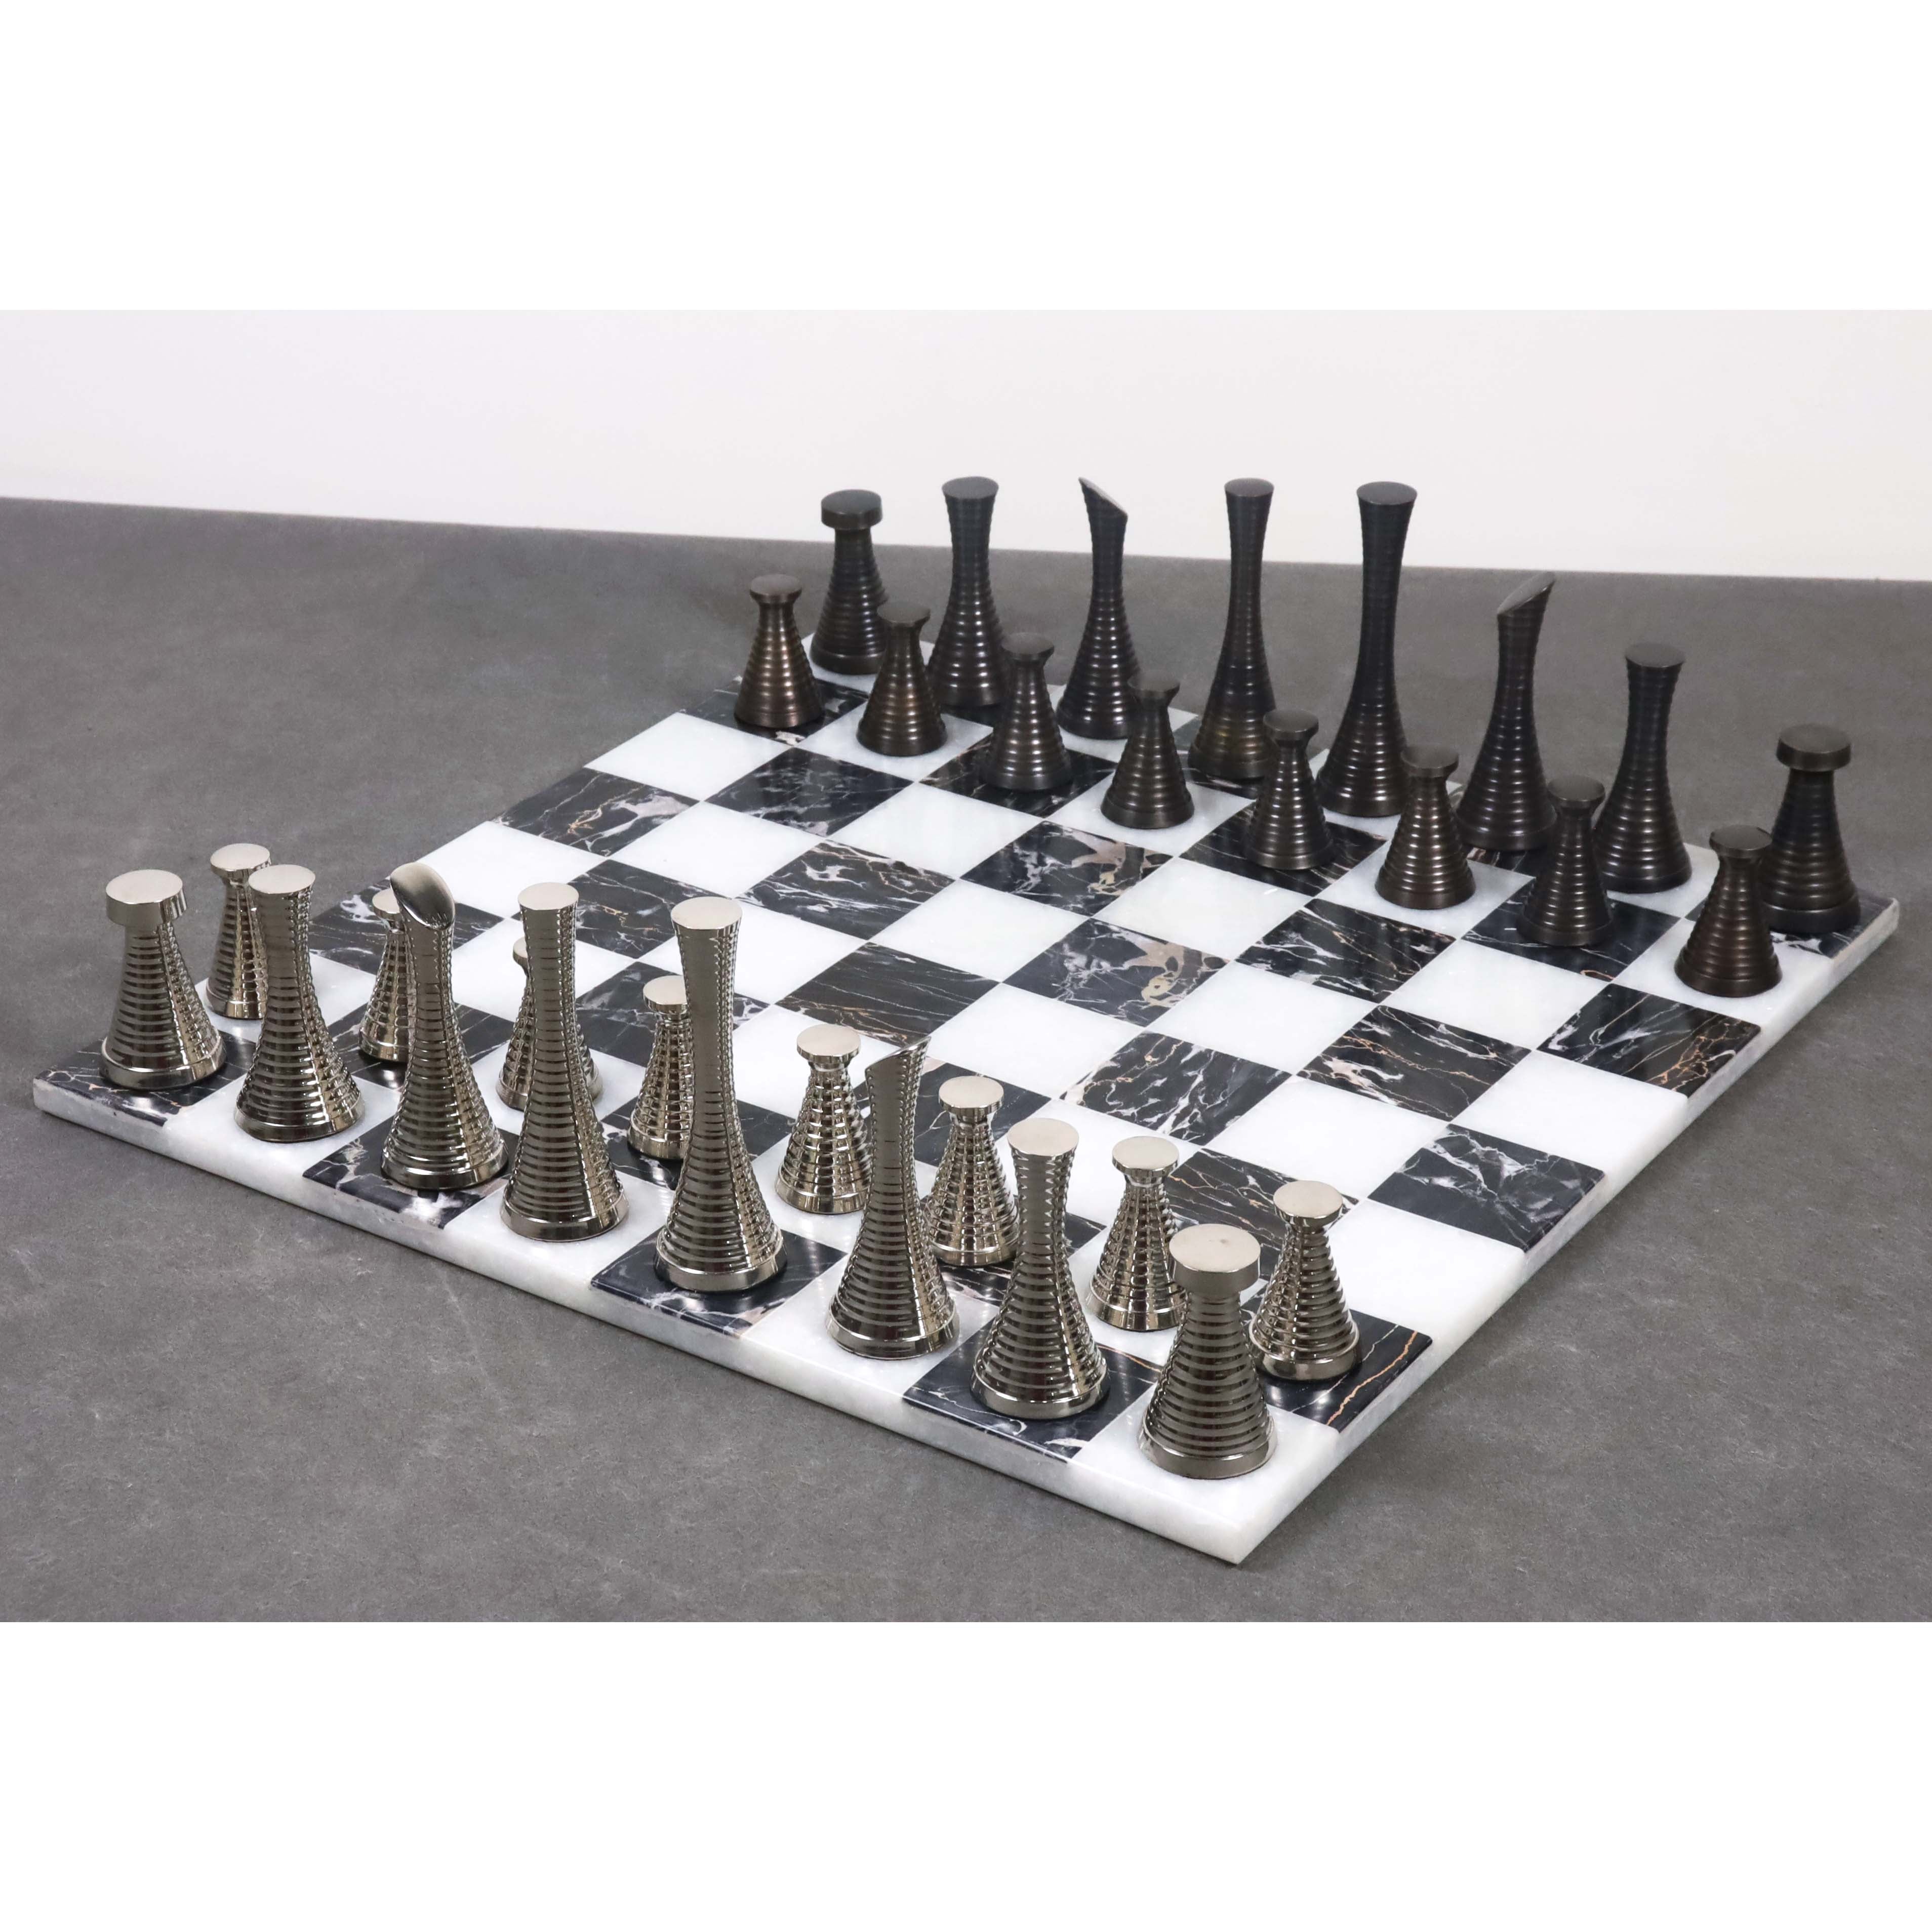 Borderless Stone Luxury Chess Board | Marble Chess Set | Unique Chess Set